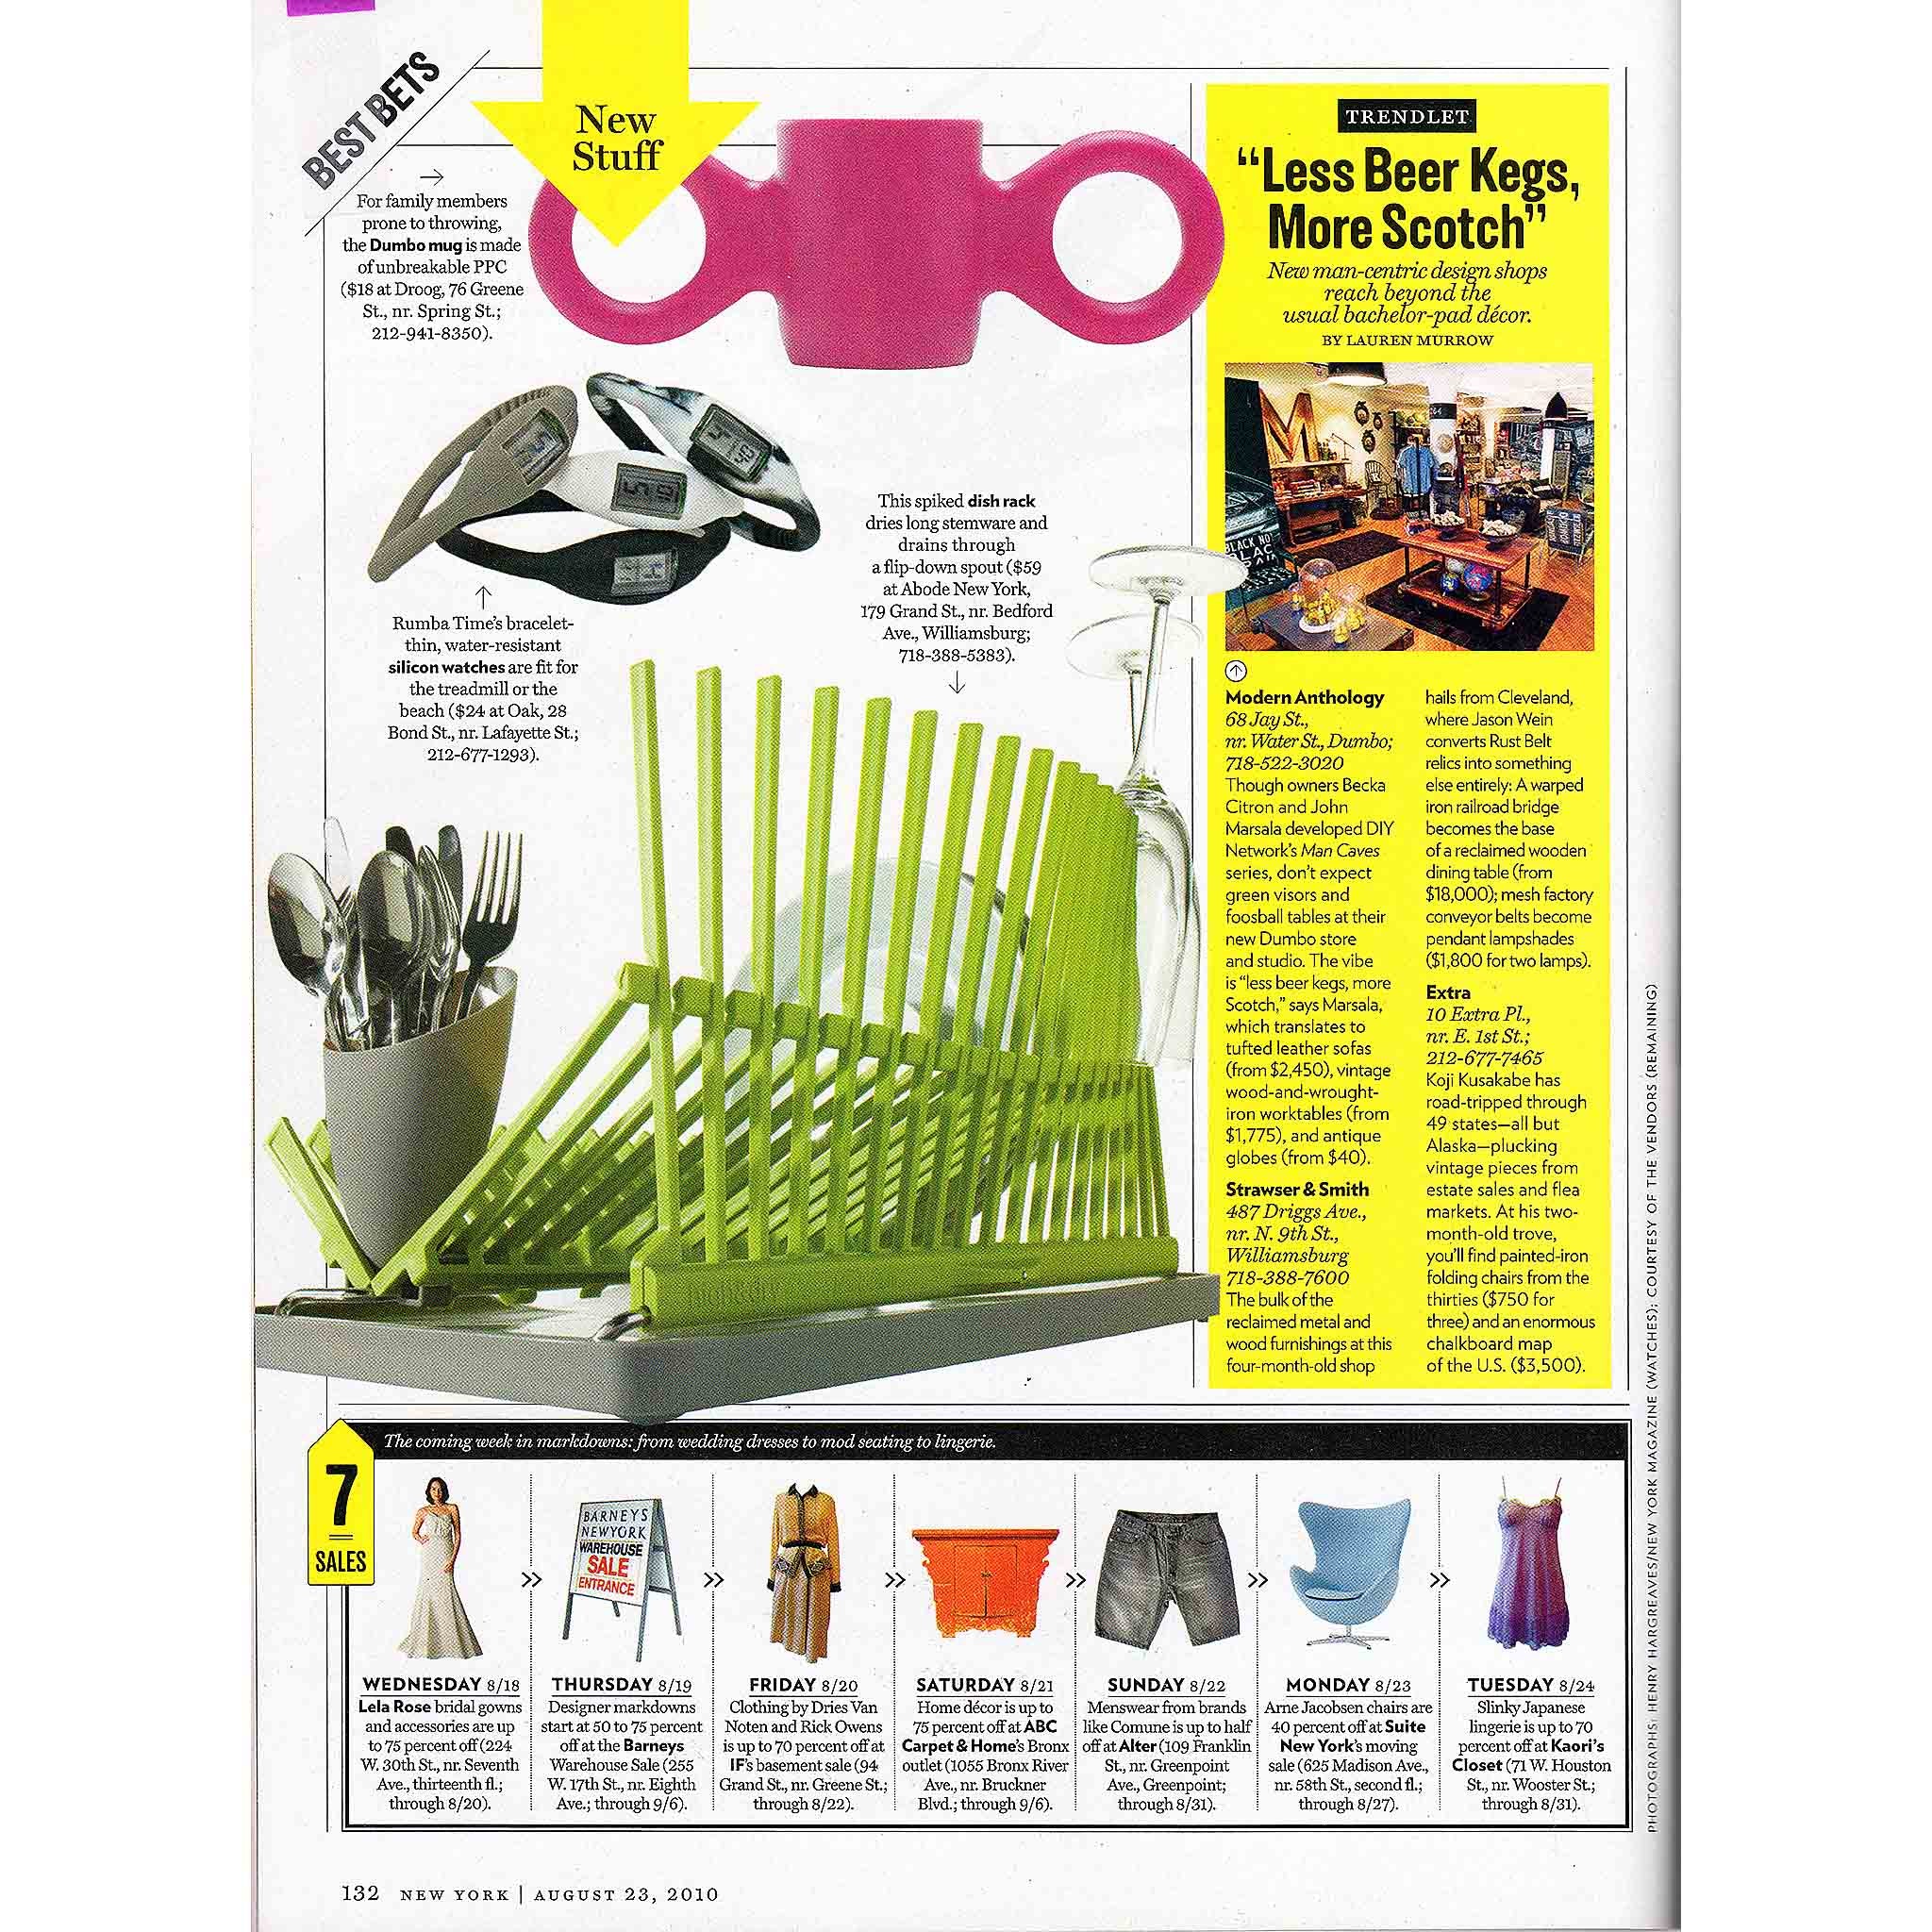 New York Magazine, Best Bet - New Stuff: Black + Blum's High & Dry dish rack, August 23, 2010.